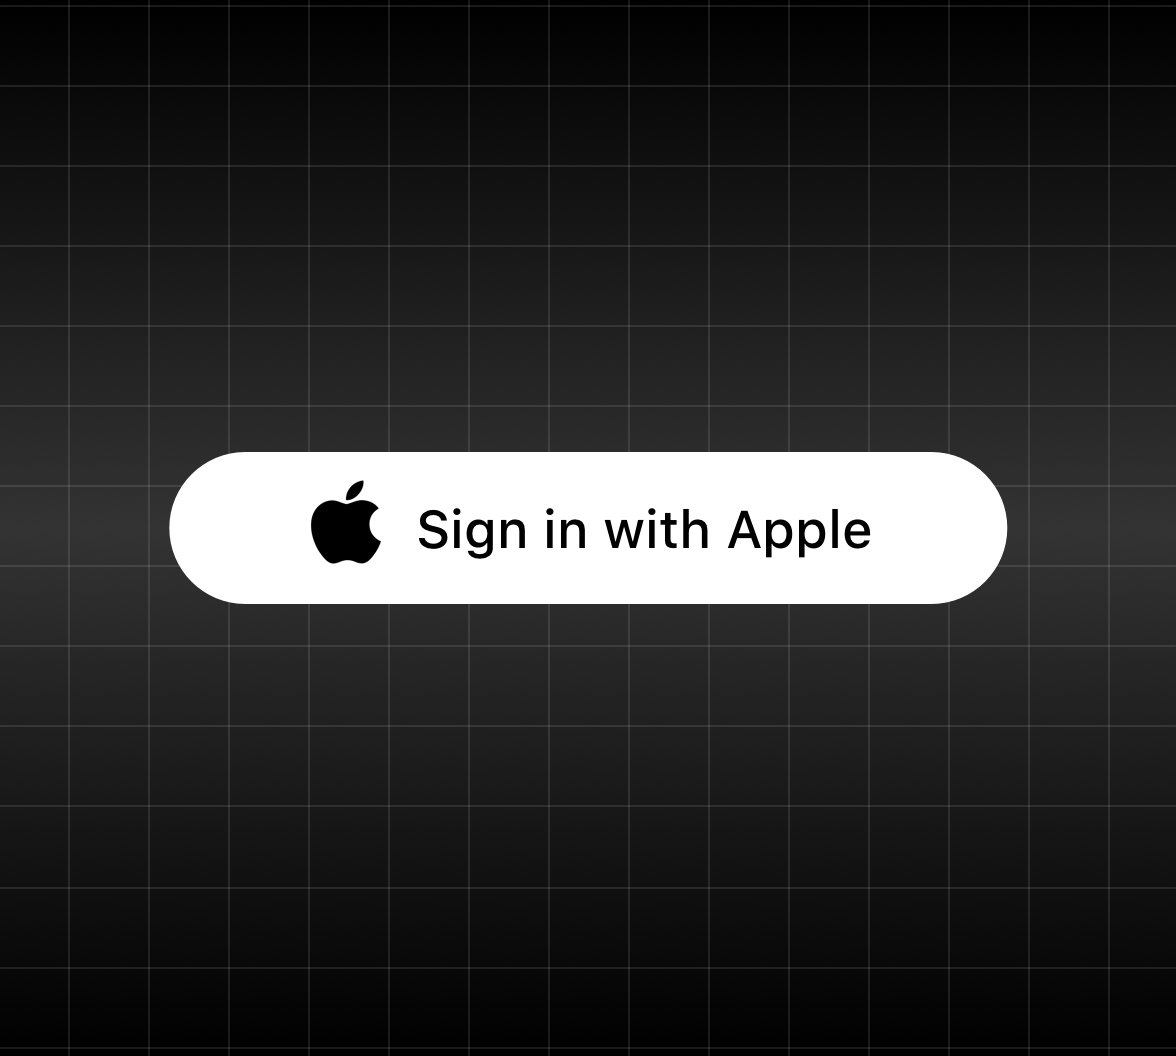 Sabe quais as Apps que já suportam o "Sign in with Apple"